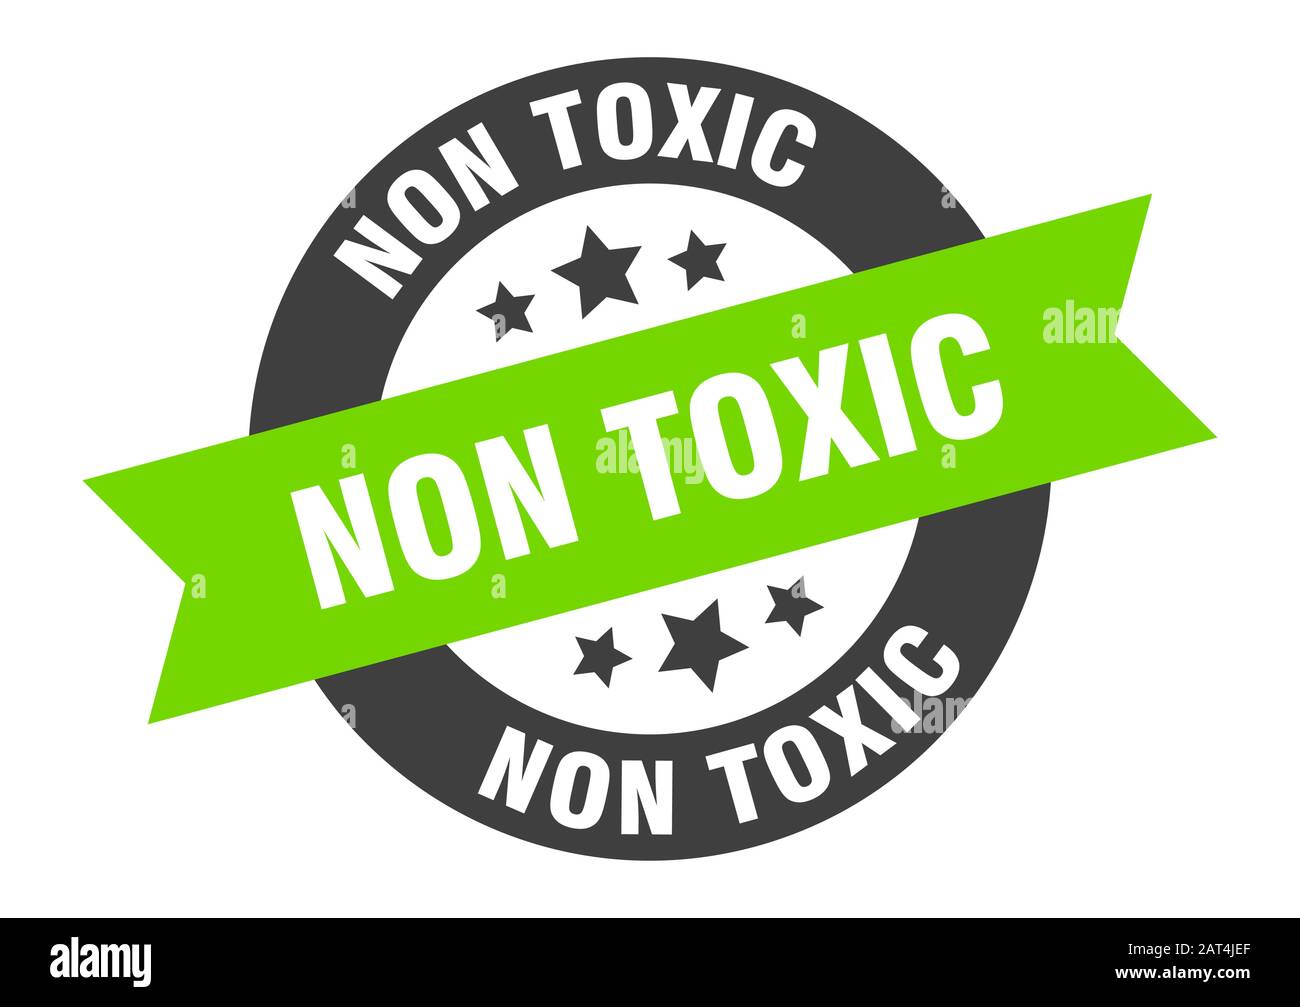 https://c8.alamy.com/comp/2AT4JEF/non-toxic-sign-non-toxic-round-ribbon-sticker-non-toxic-tag-2AT4JEF.jpg